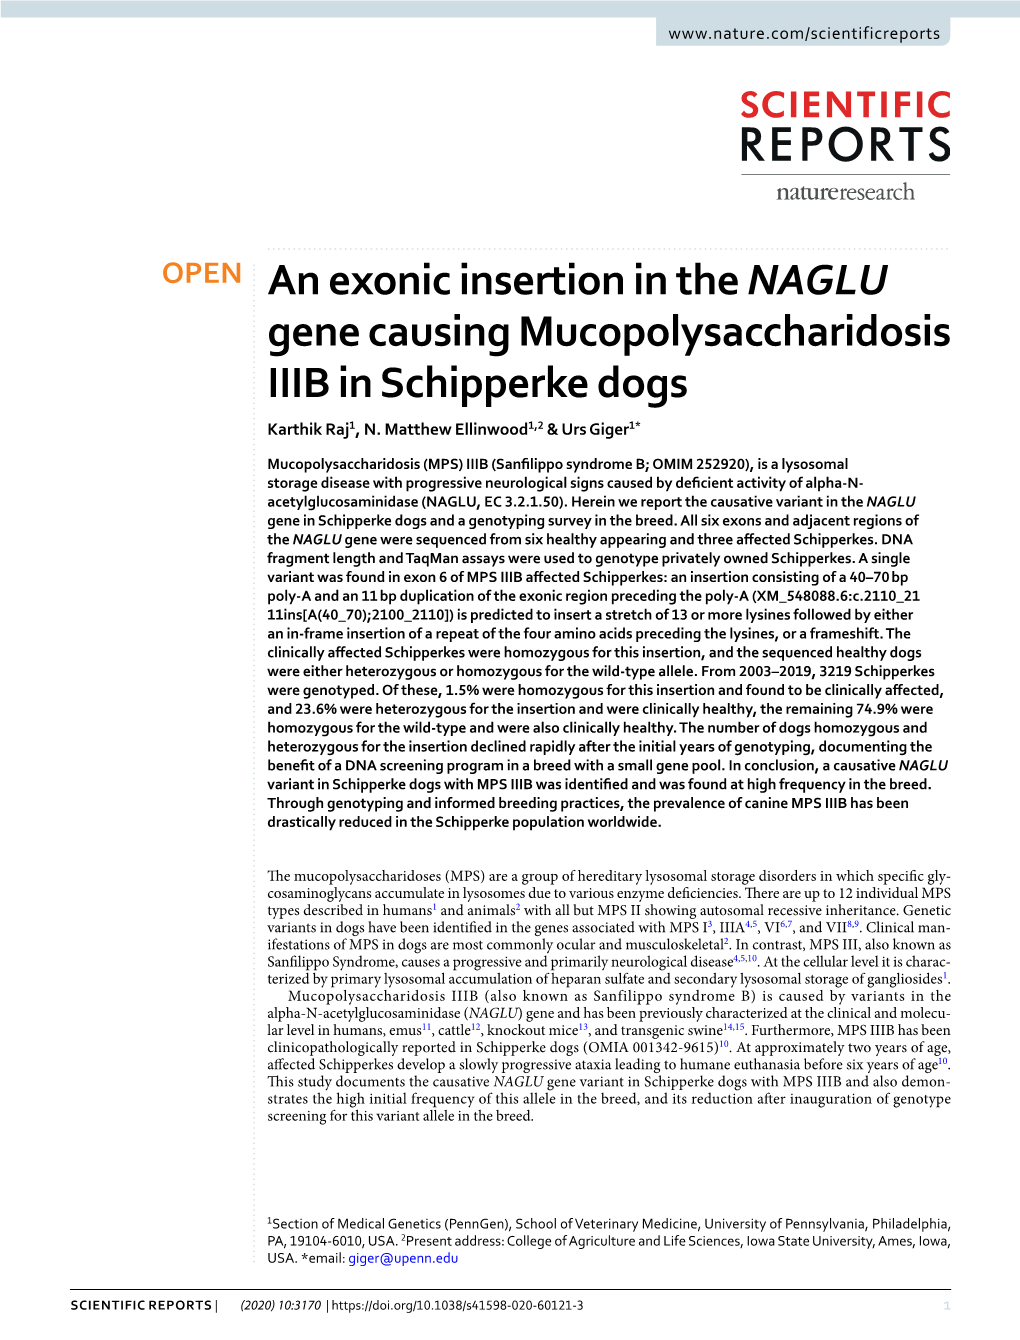 An Exonic Insertion in the NAGLU Gene Causing Mucopolysaccharidosis IIIB in Schipperke Dogs Karthik Raj1, N